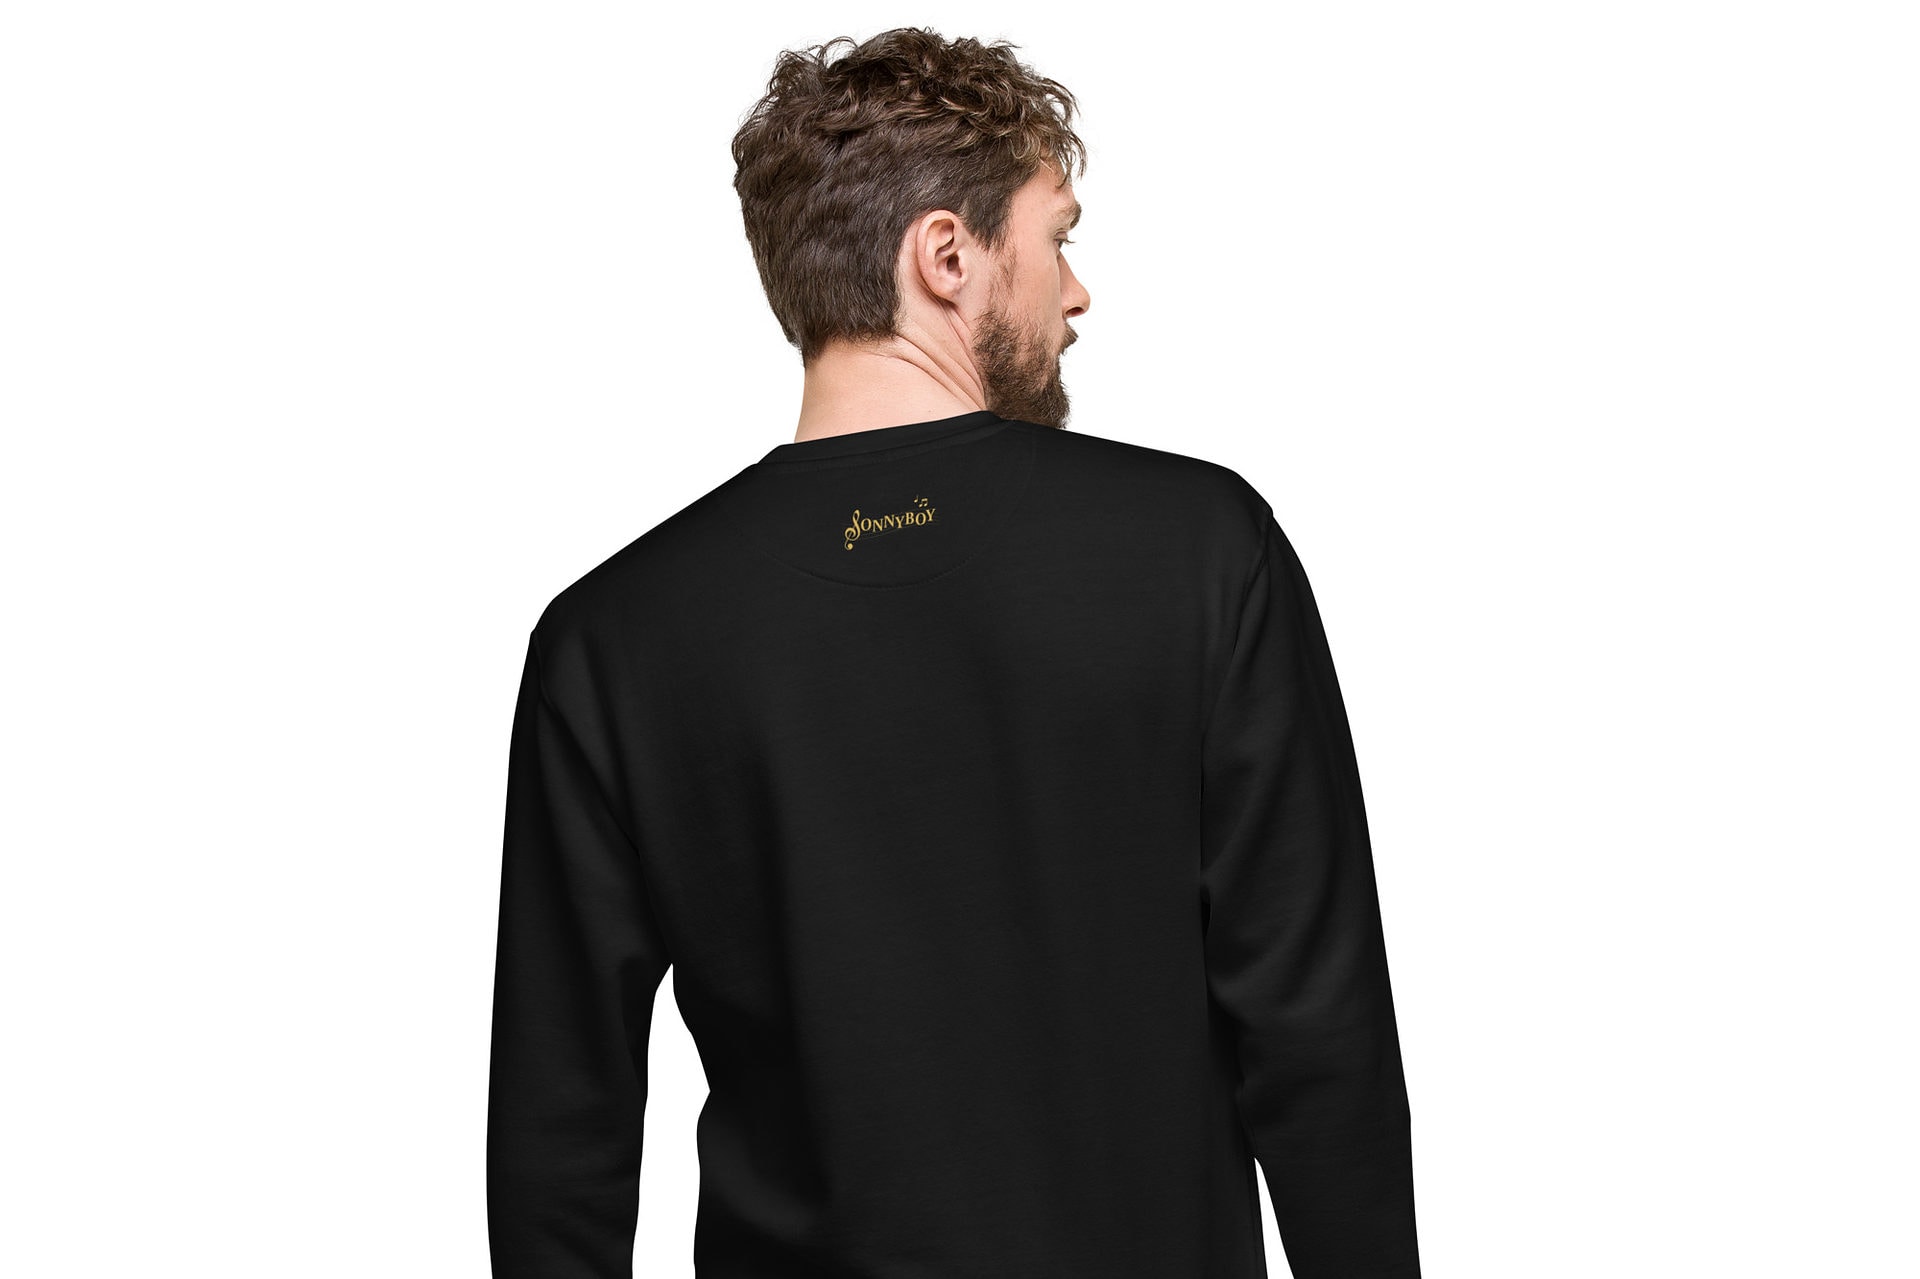 Unisex Premium Sweatshirt Black Back 62F9574Aa2Fdc